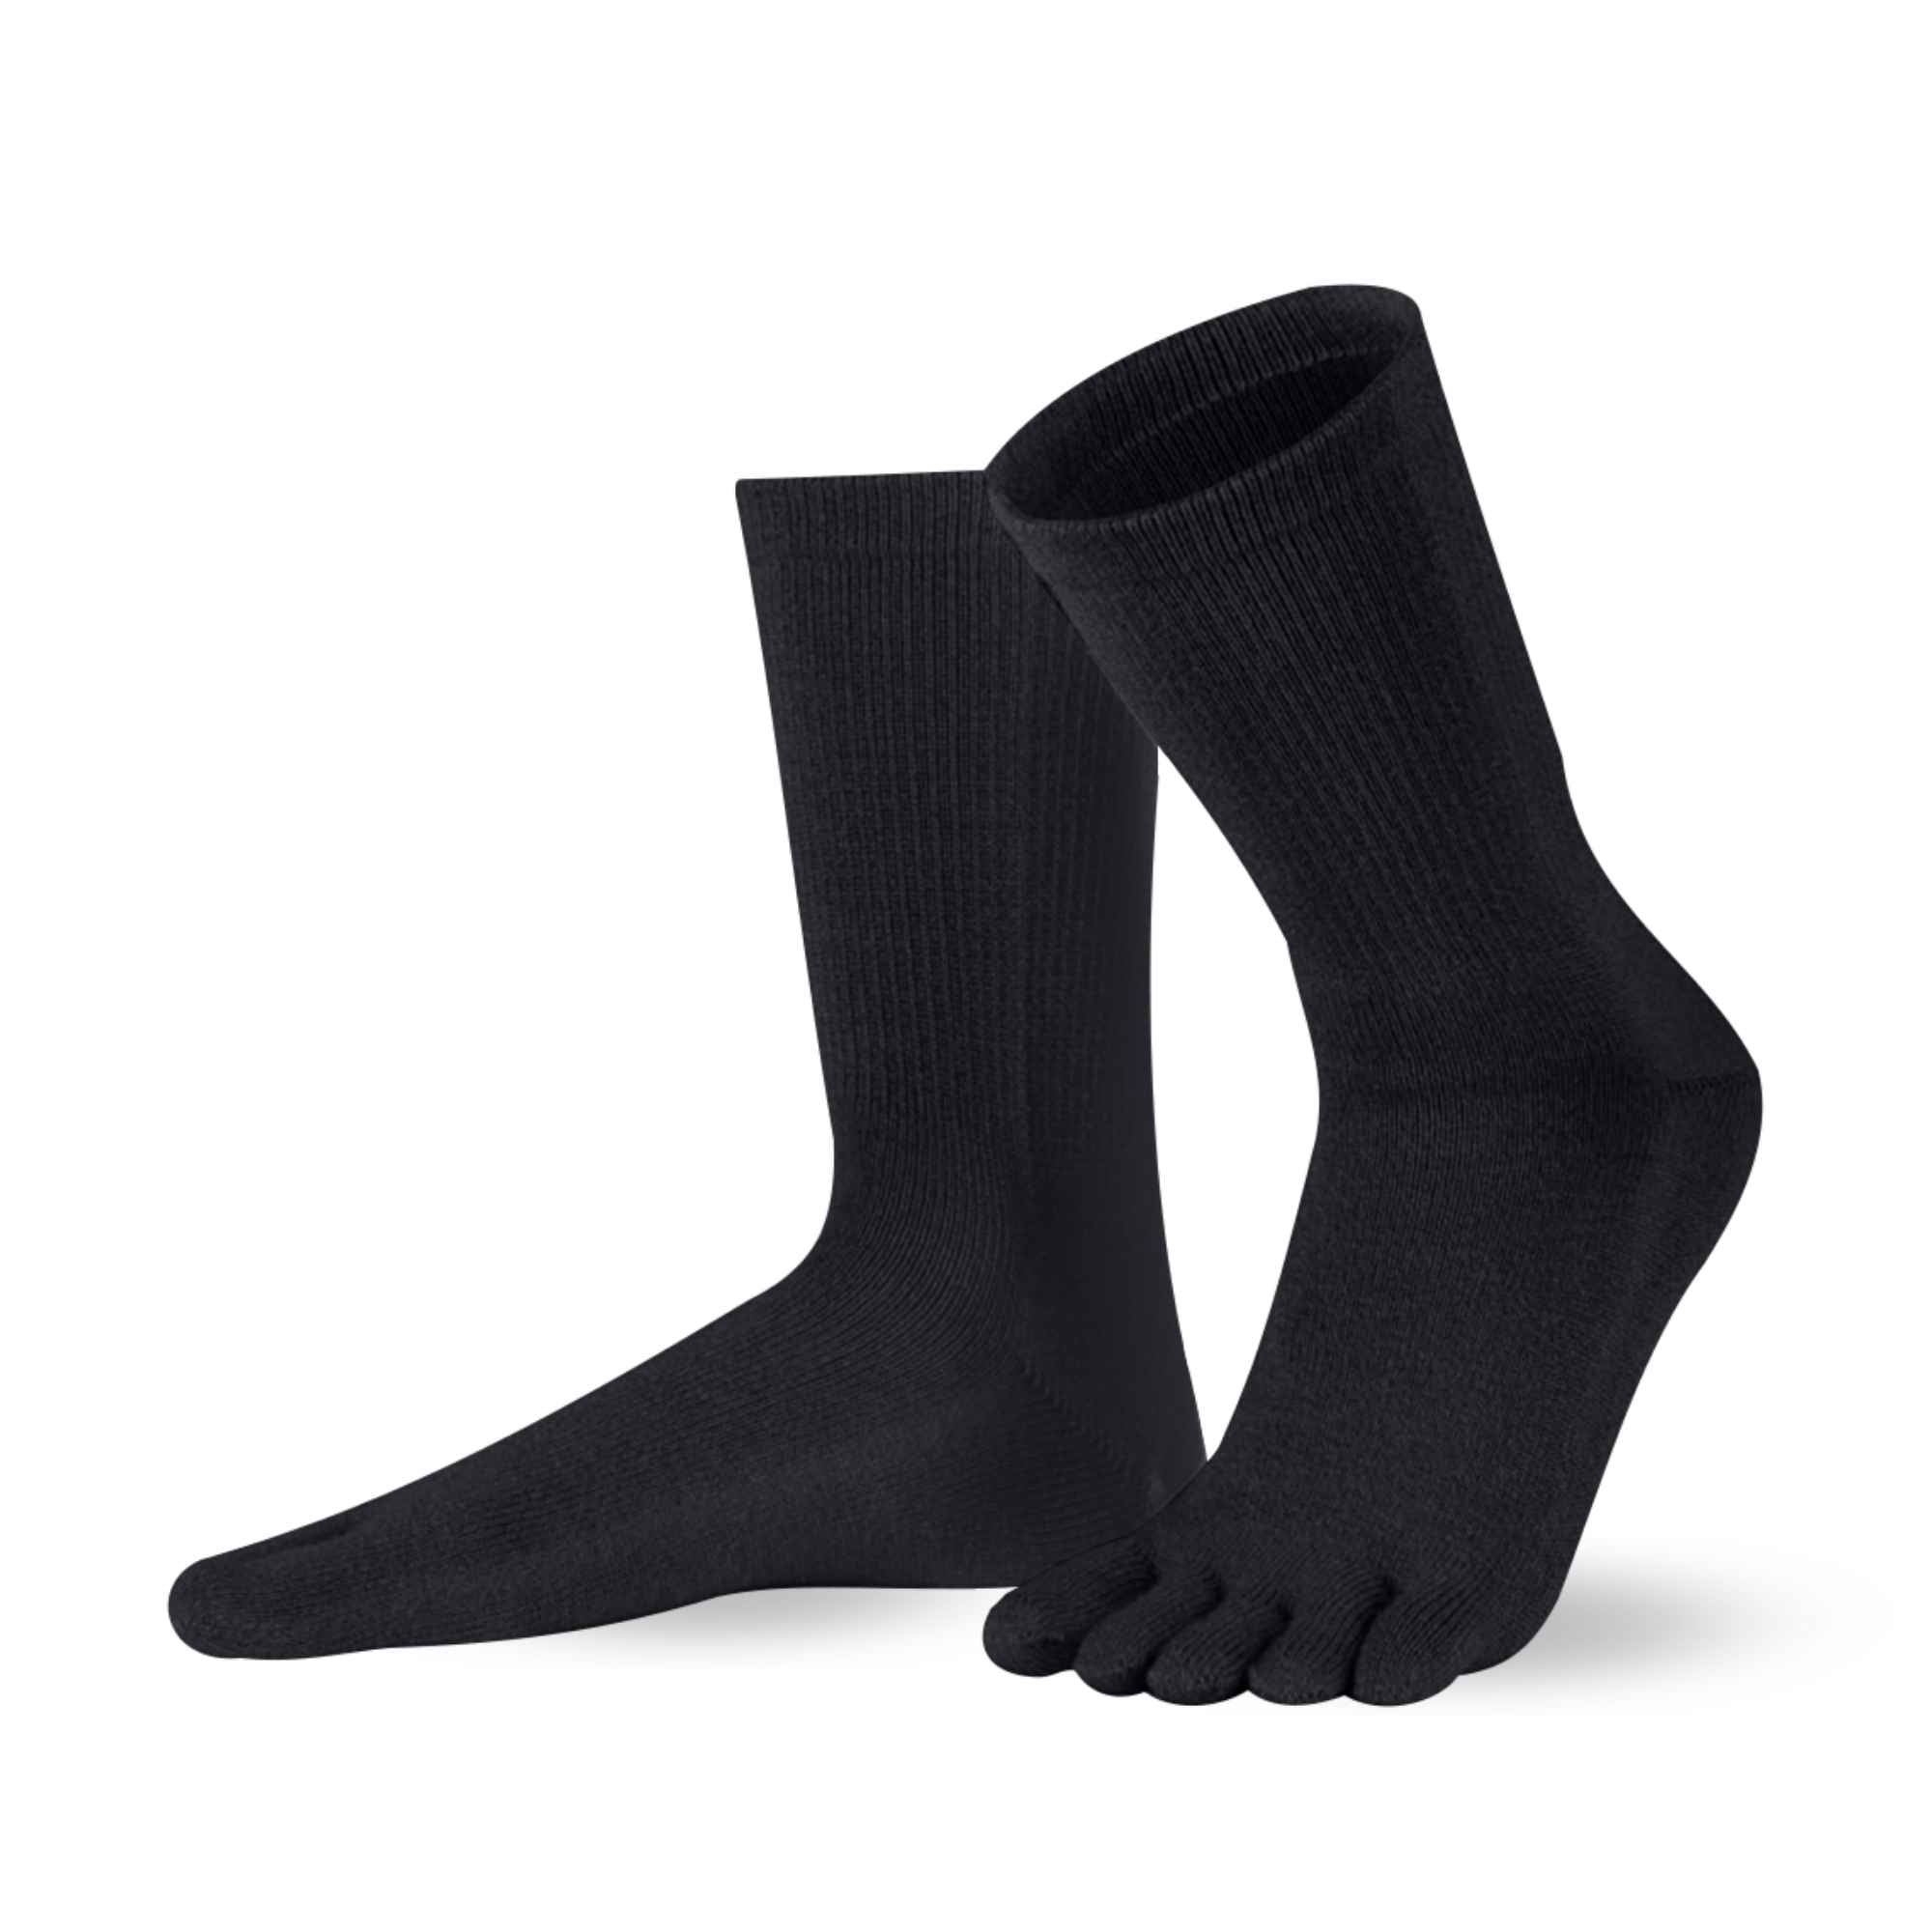 Cotton & Merino , mid-calf - Knitido®. The toe socks